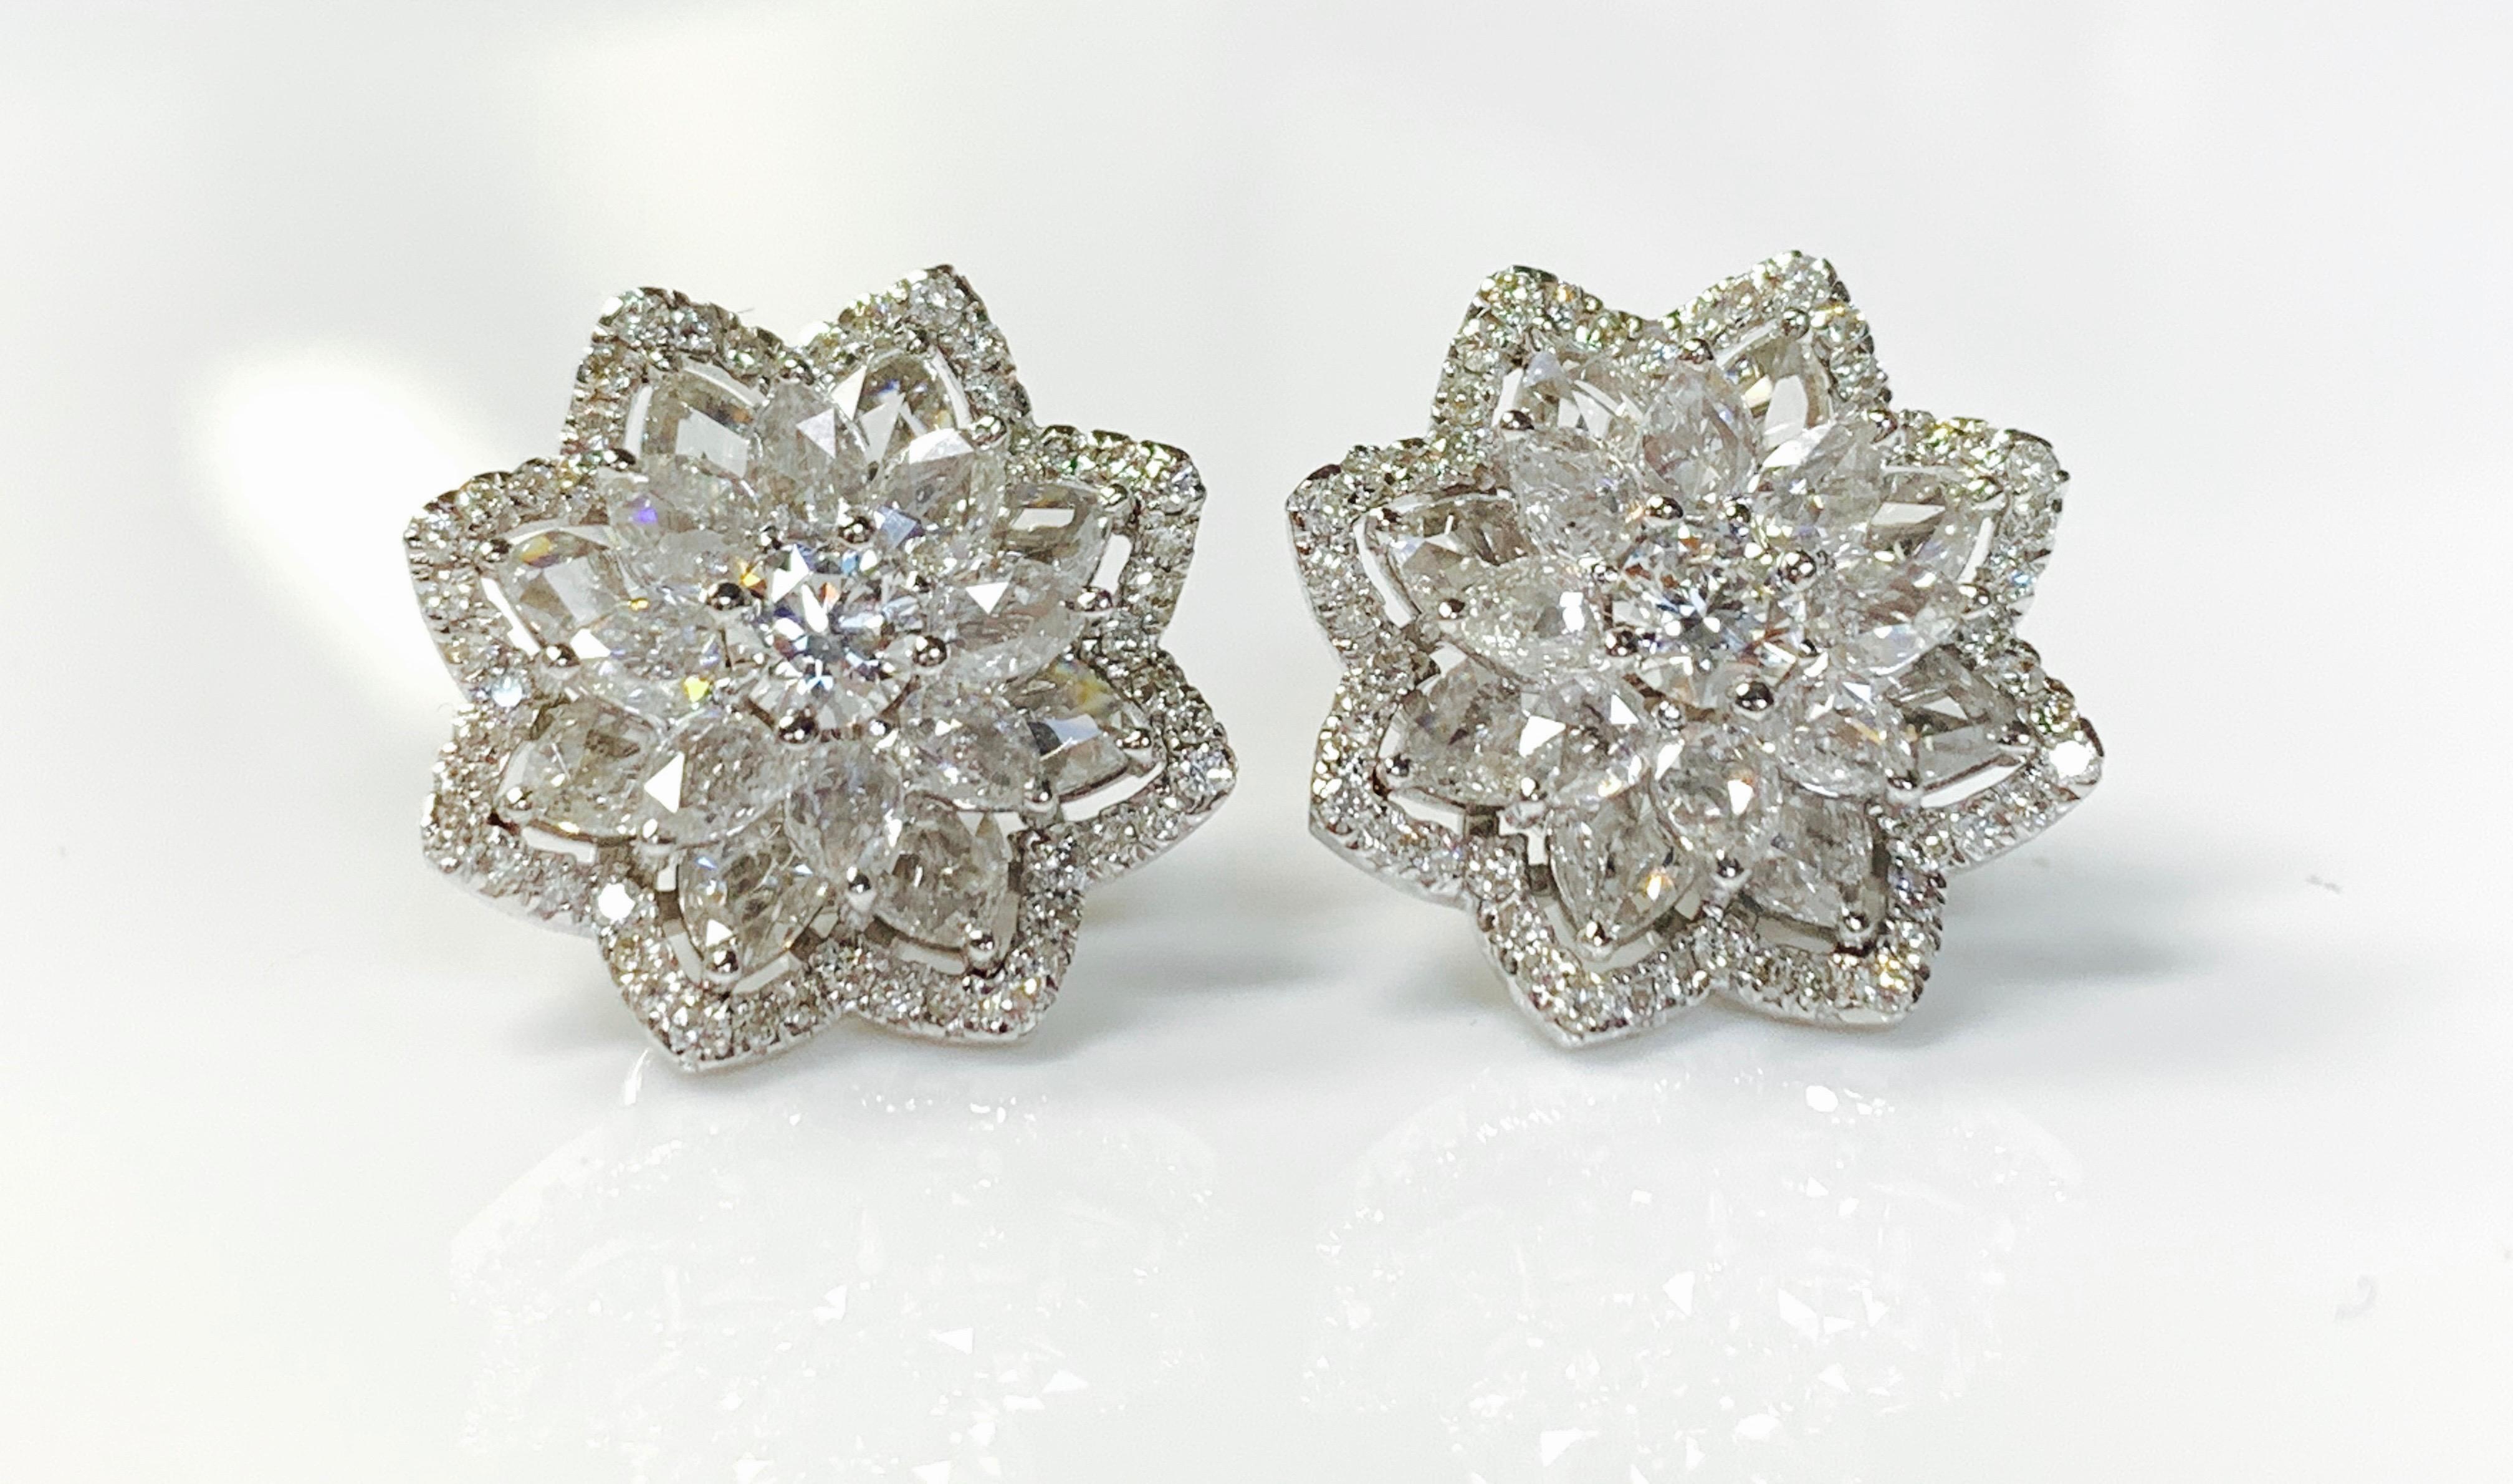 7 stone diamond earrings tanishq